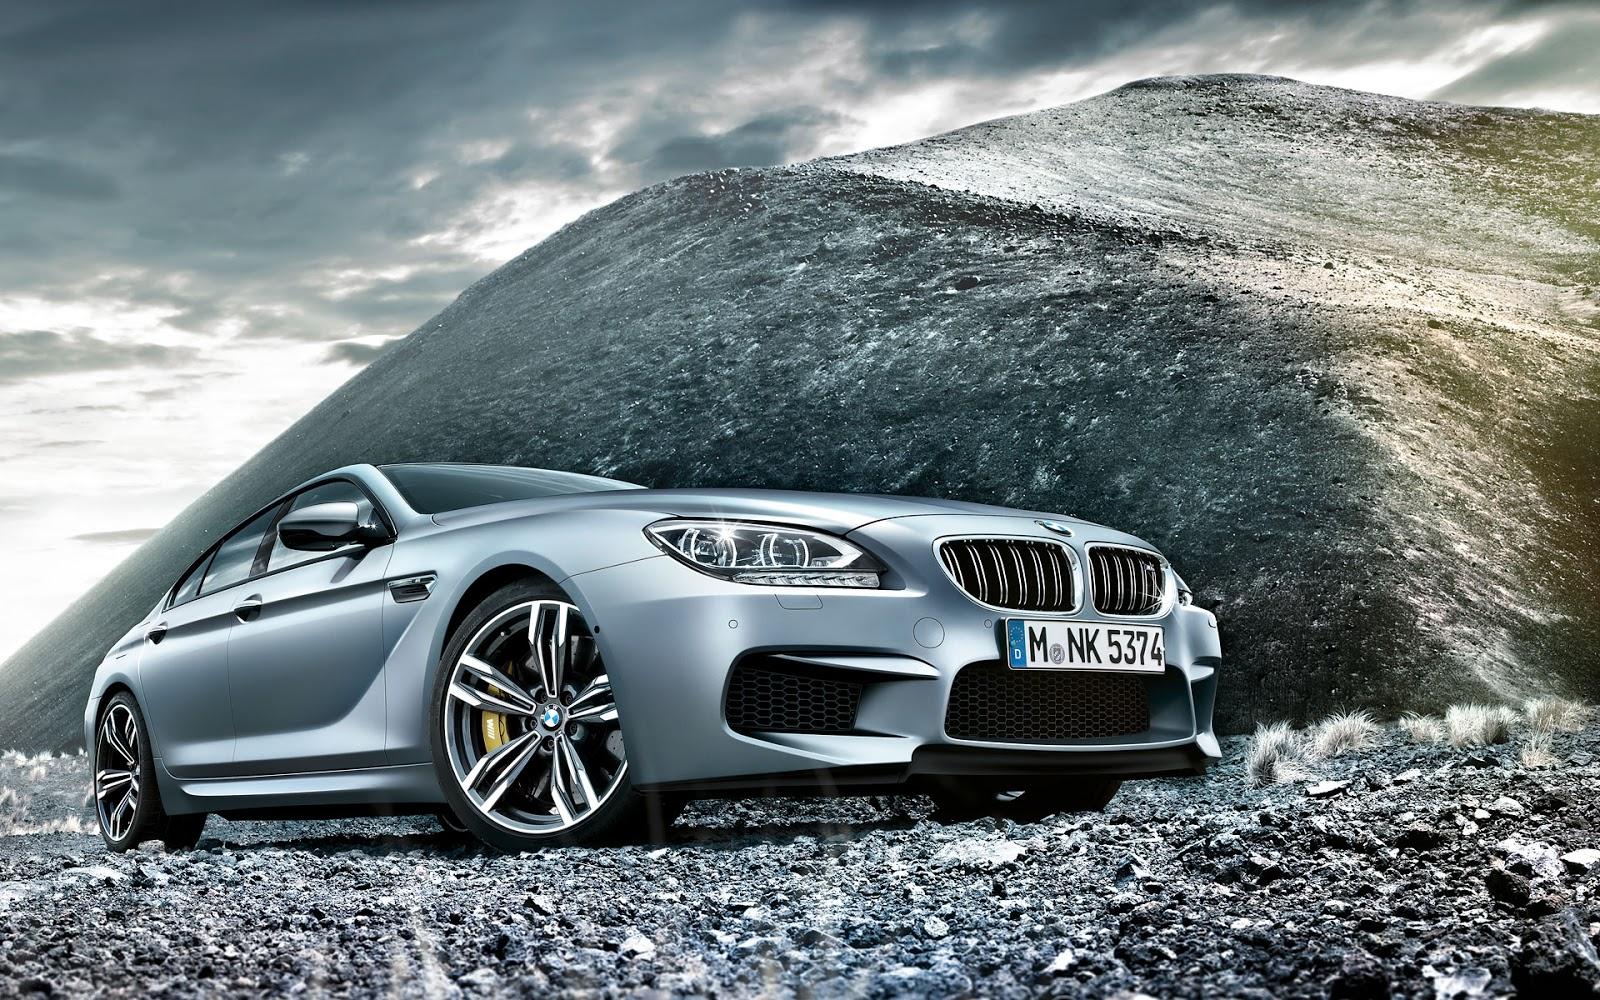 Epic 2014 BMW M6 Gran Coupe Wallpaper (Gallery)